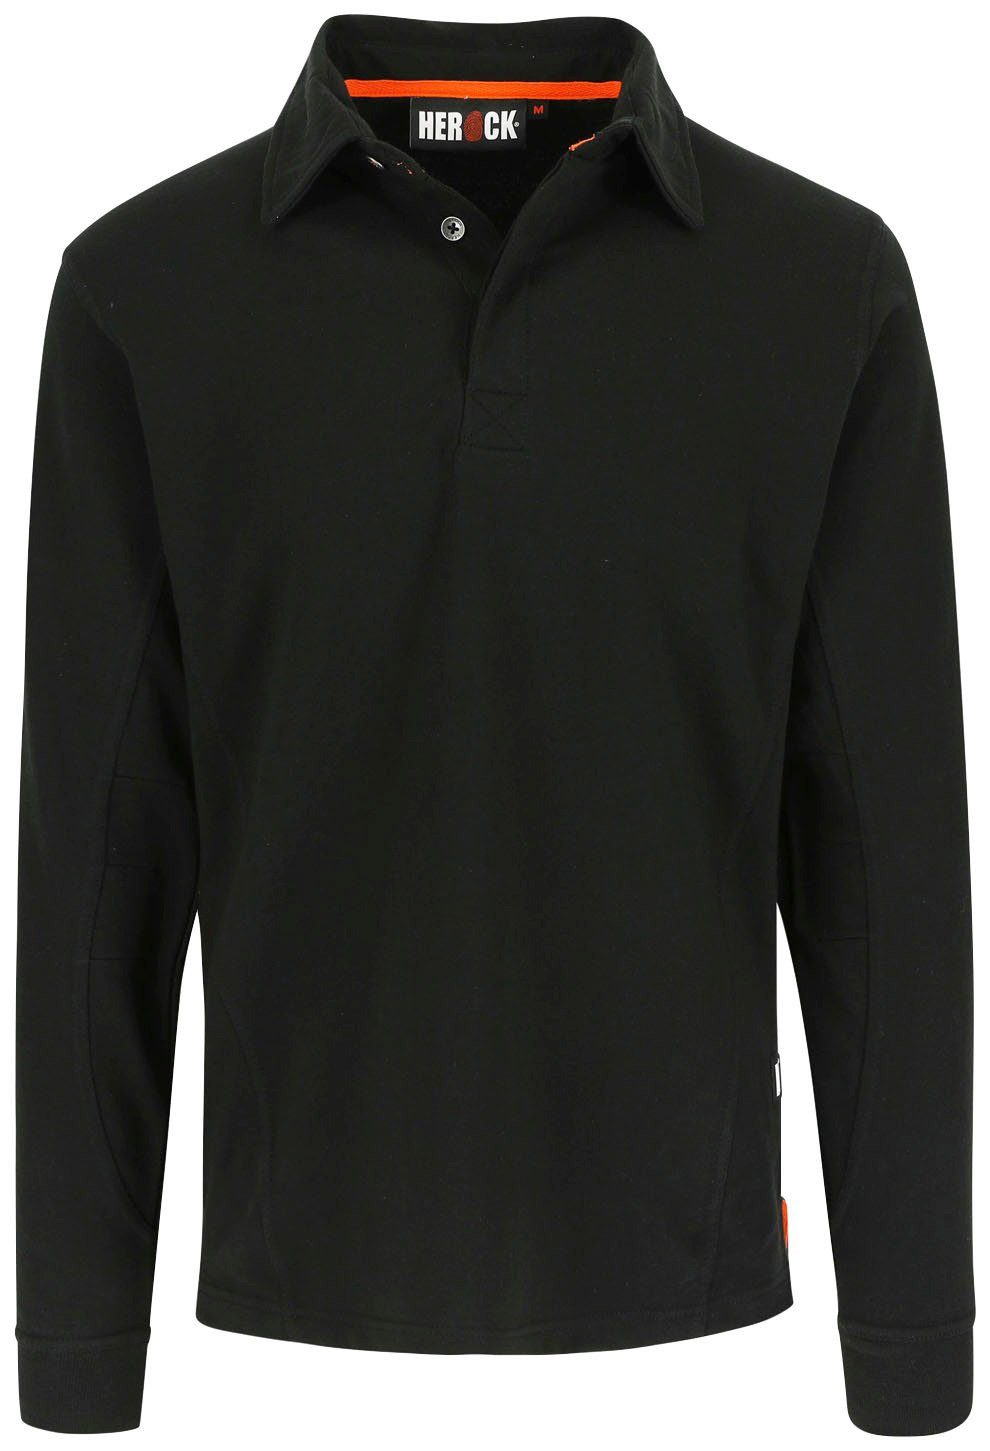 Herock Langarm-Poloshirt Troja Polo Langärmlig Angenehmes Tragegefühl, leicht figurformend, verschiedene Farben schwarz | Poloshirts